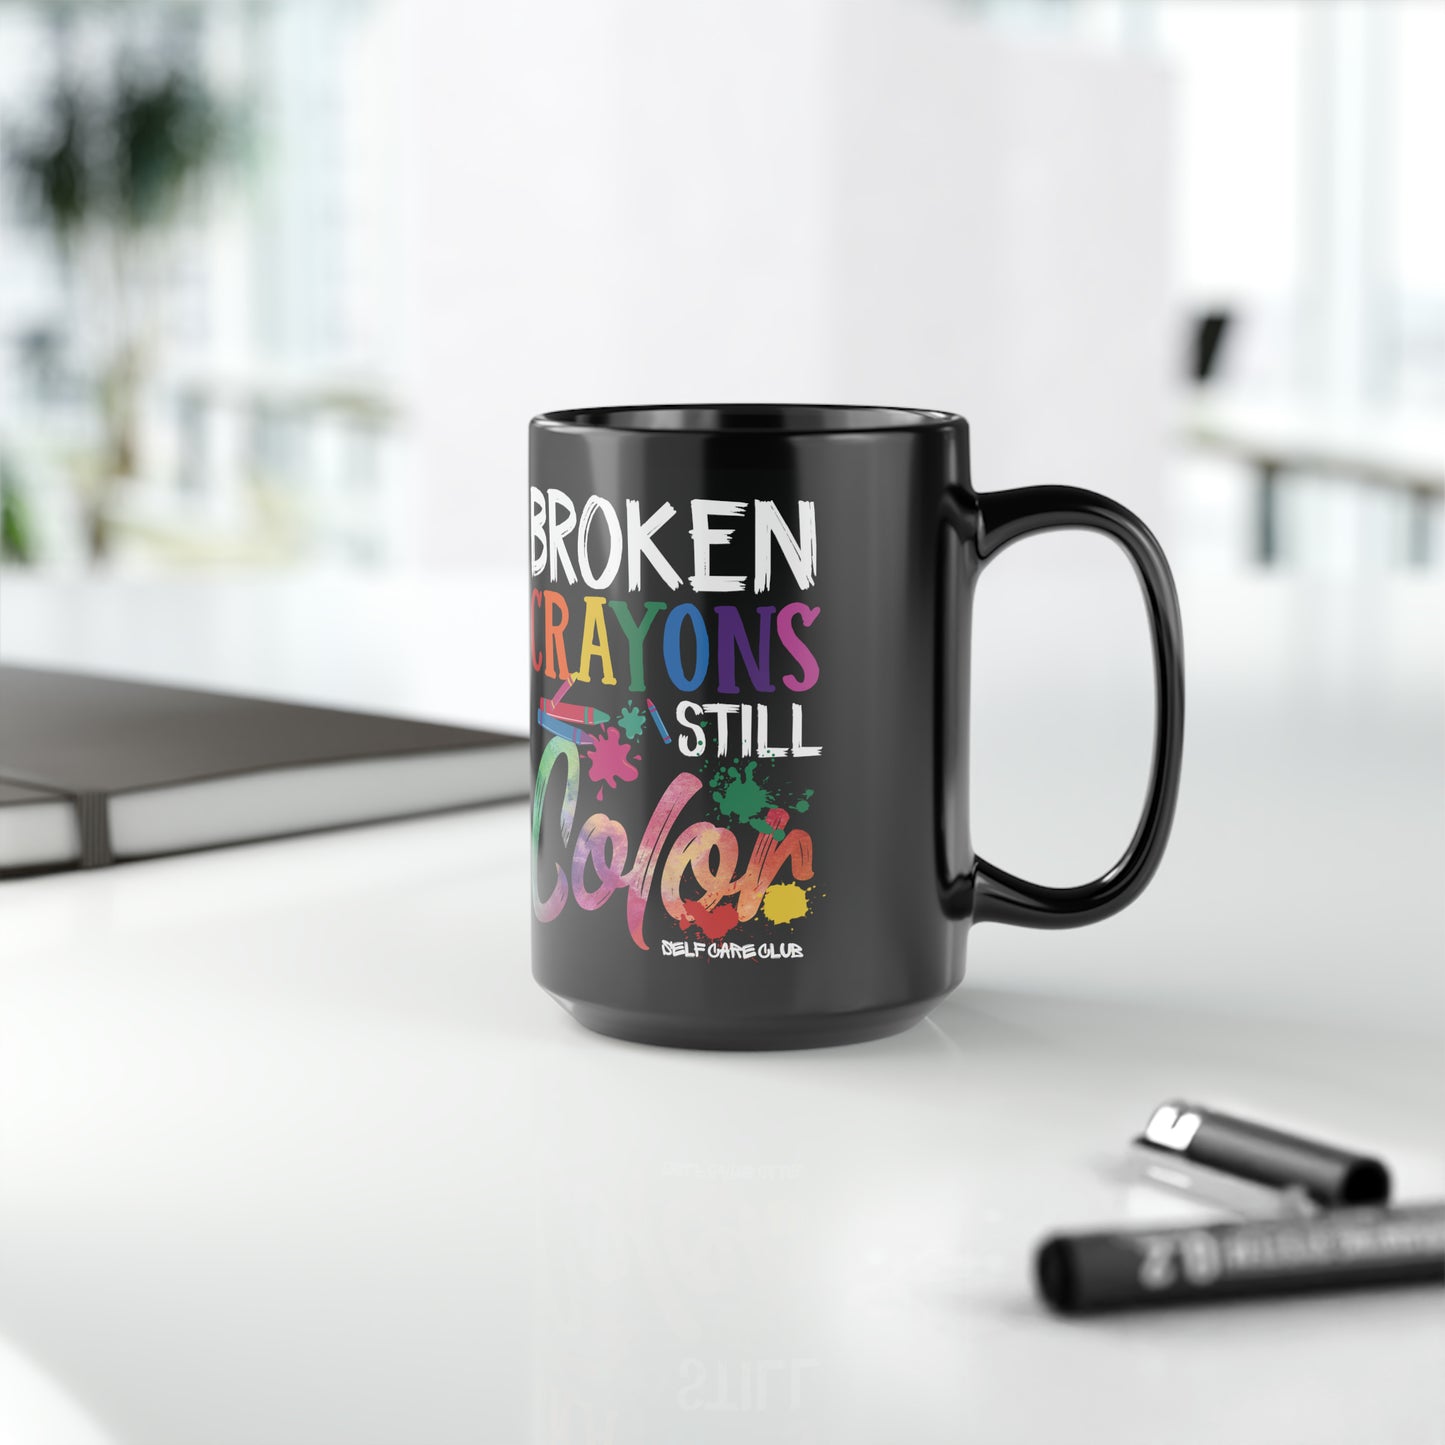 Broken Crayons Still Color BCSC Mug, 15oz